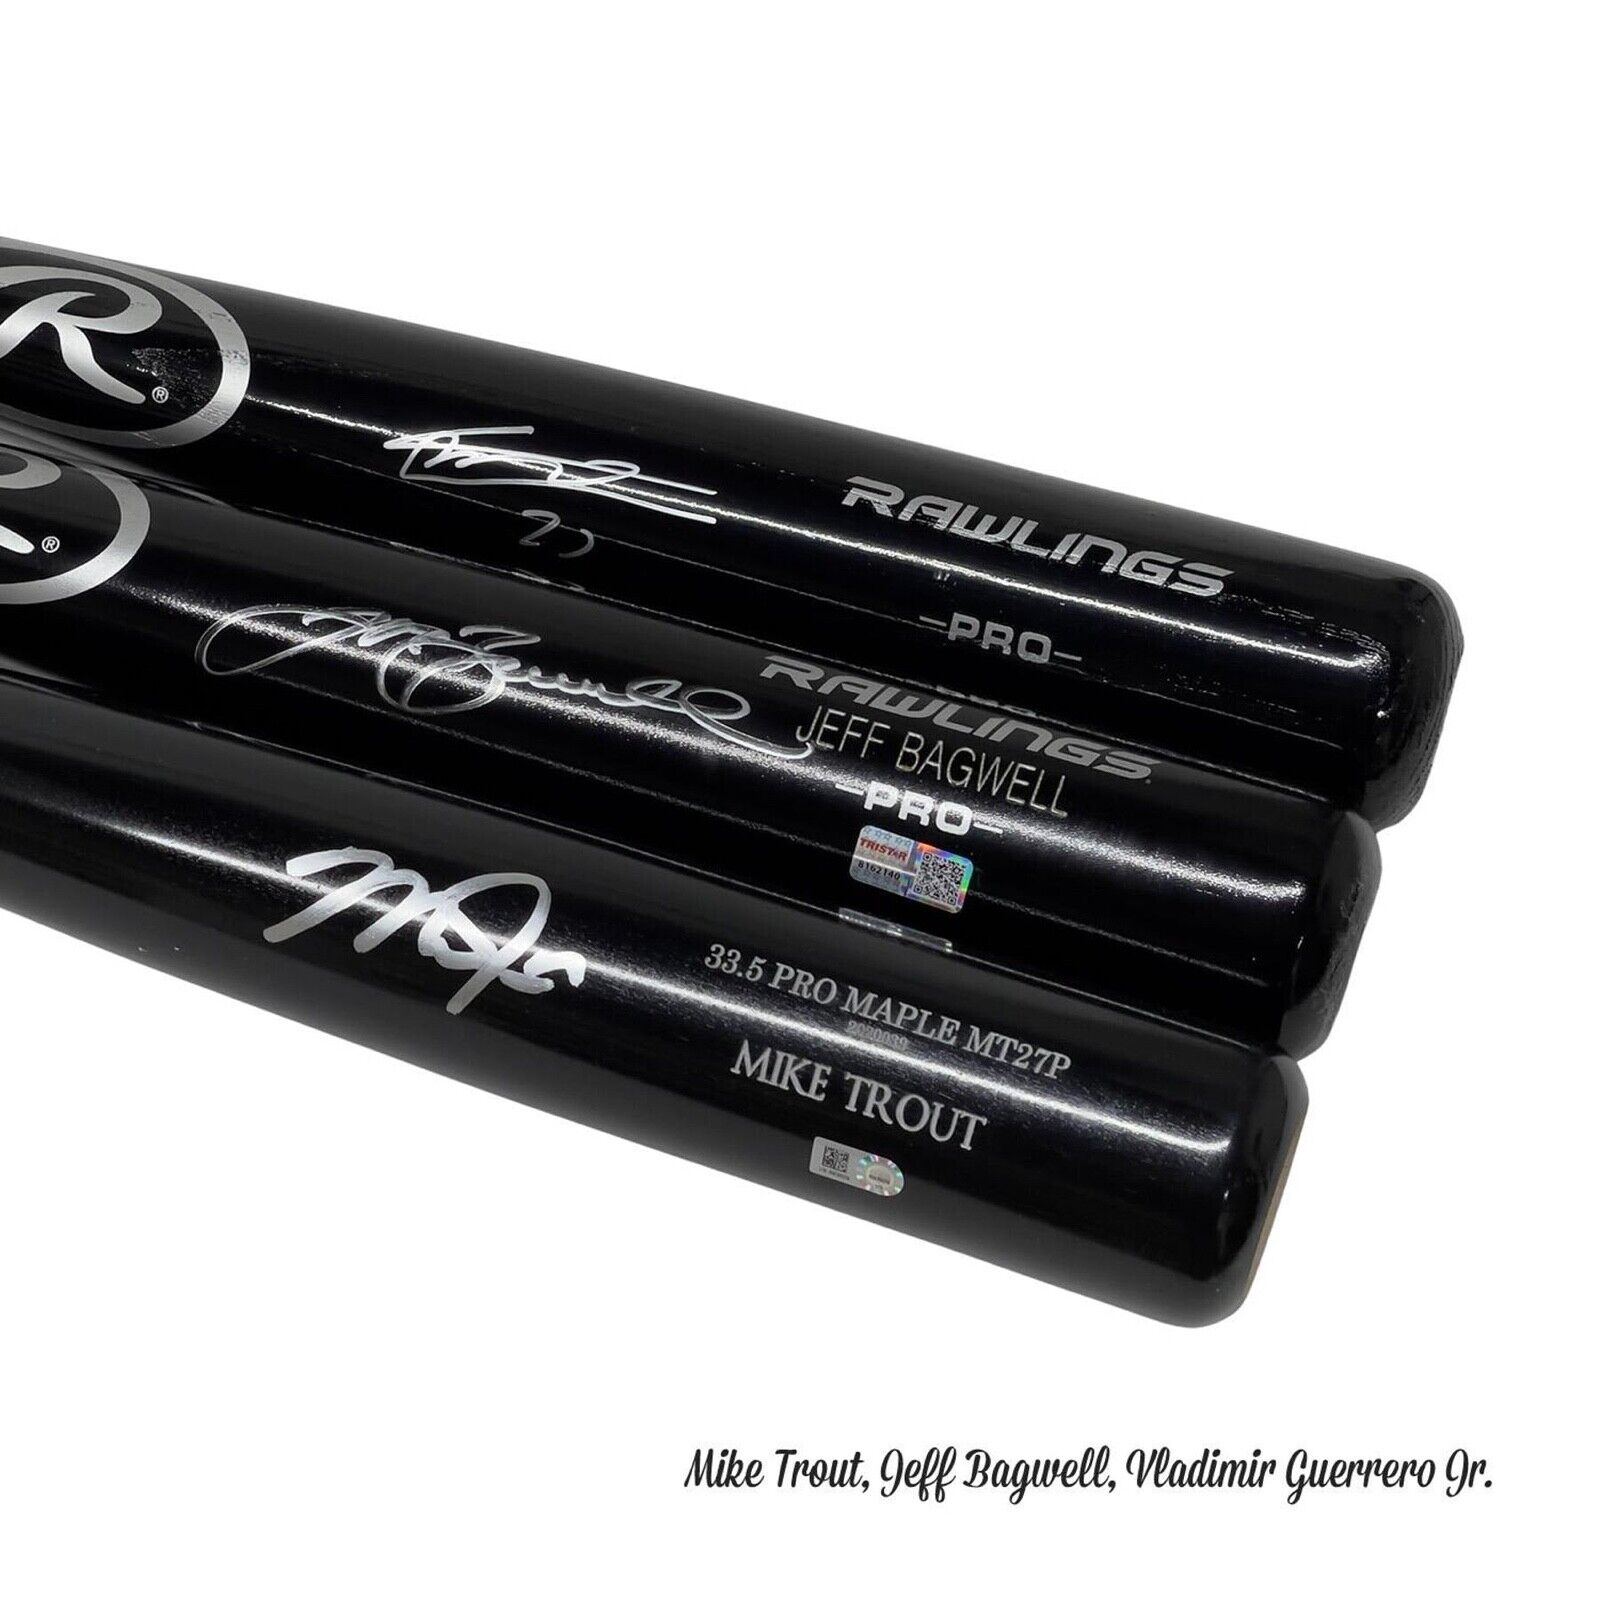 TEXAS RANGERS HitParade Autographed Baseball Bat S15 - Live Break 1box